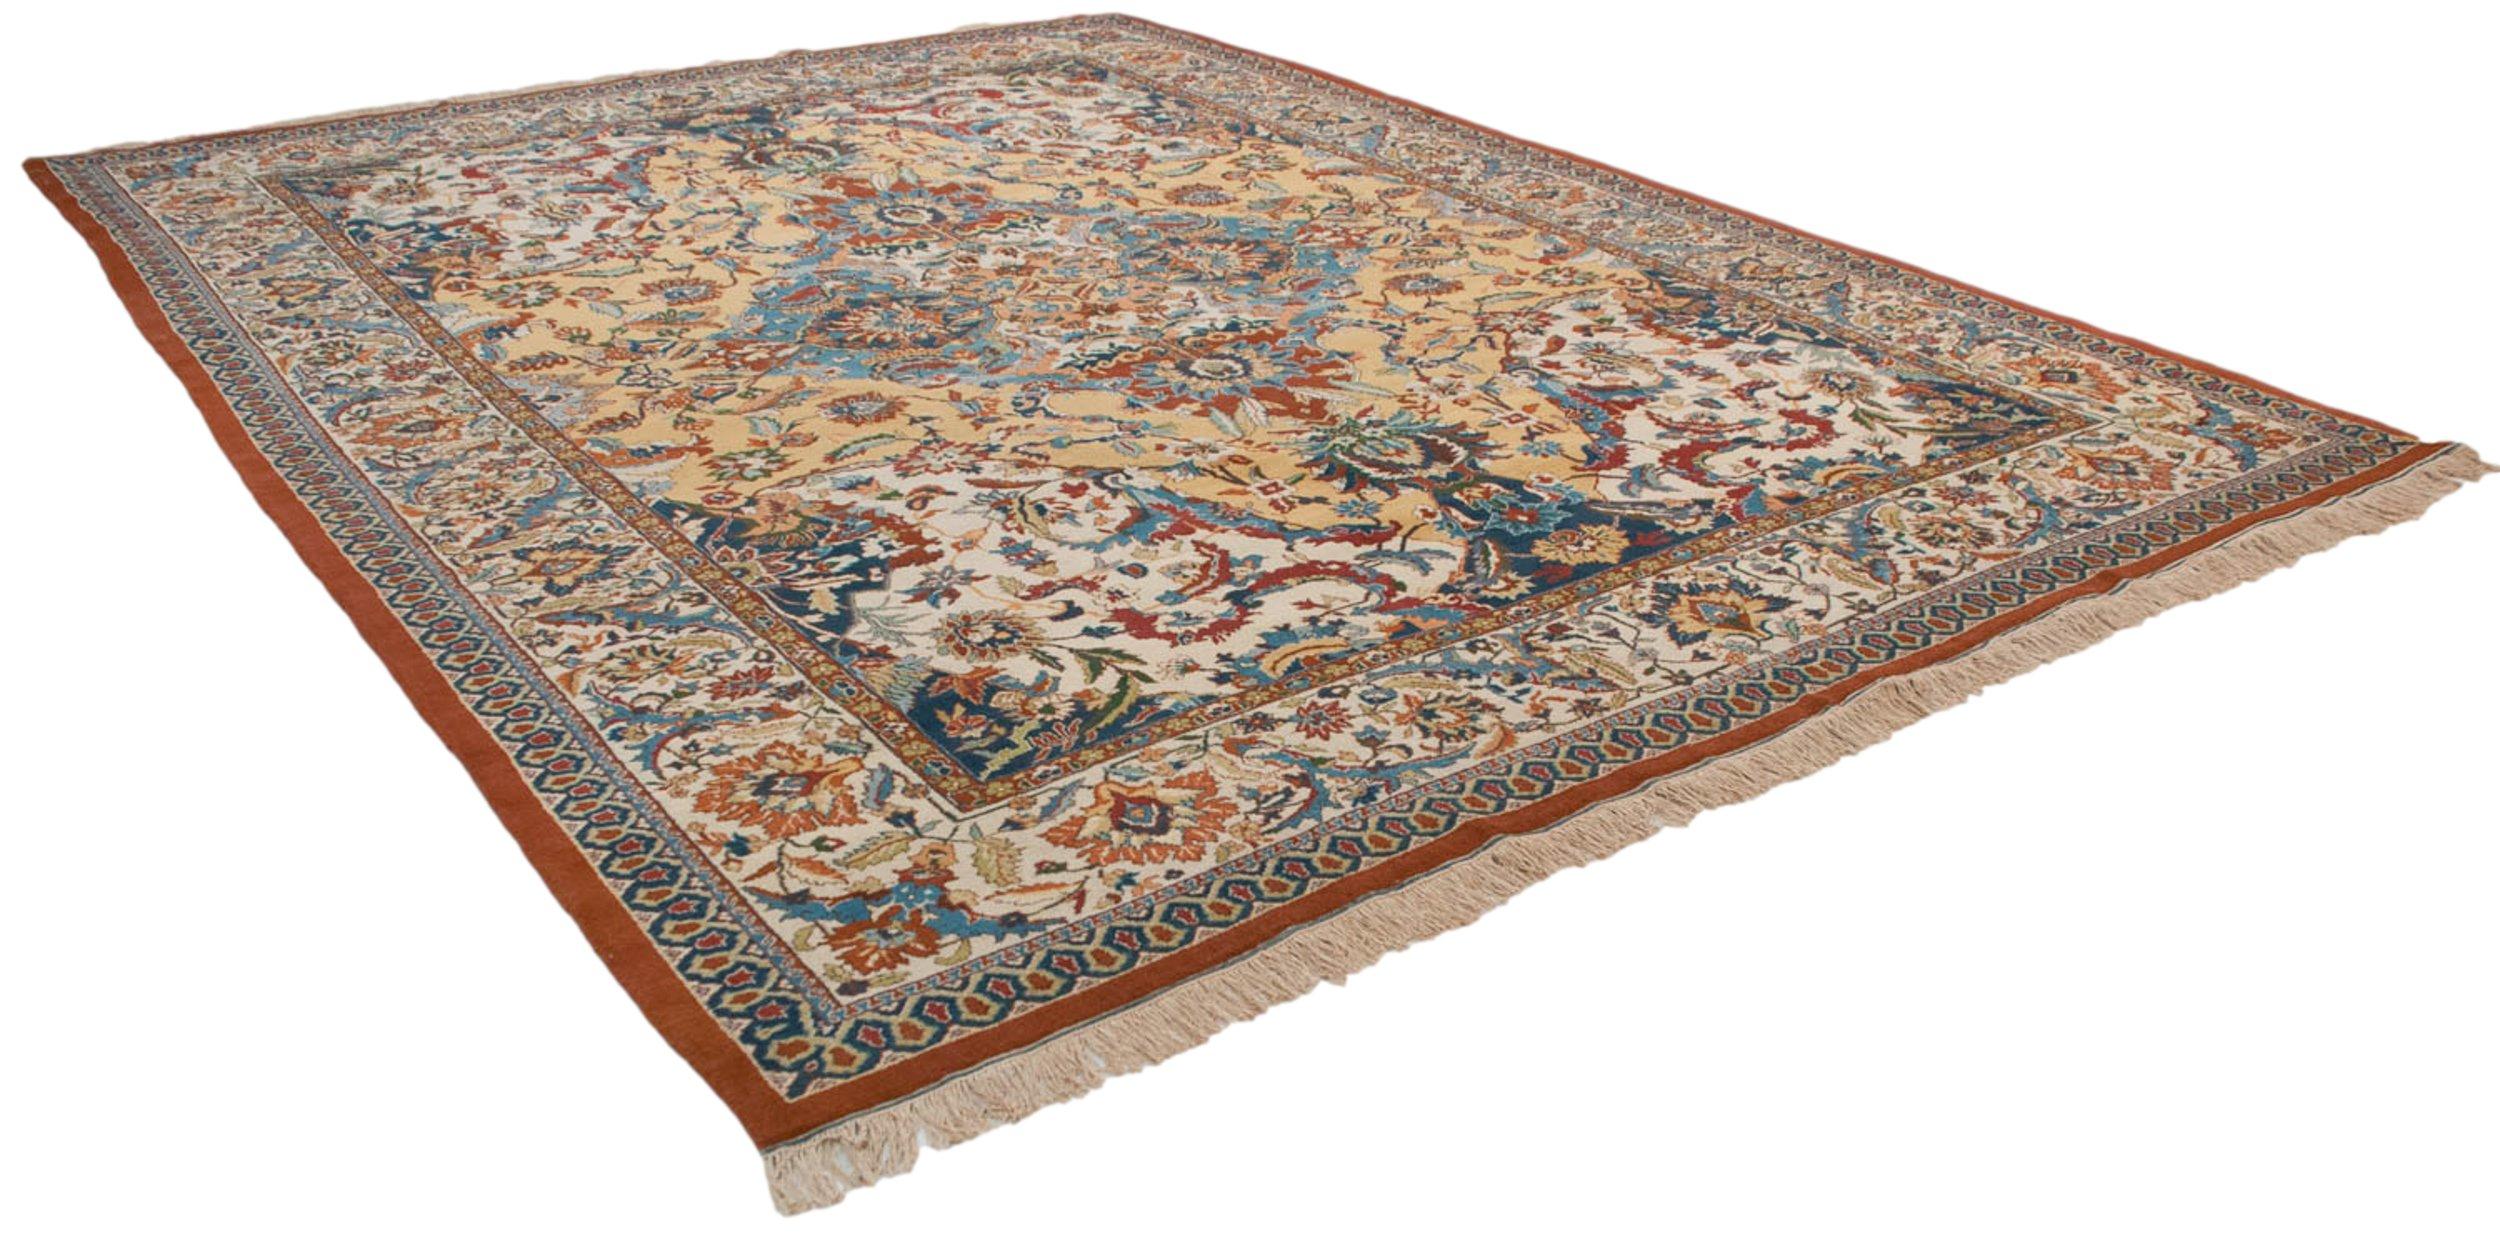 Wool Vintage Indian Polonaise Design Carpet For Sale